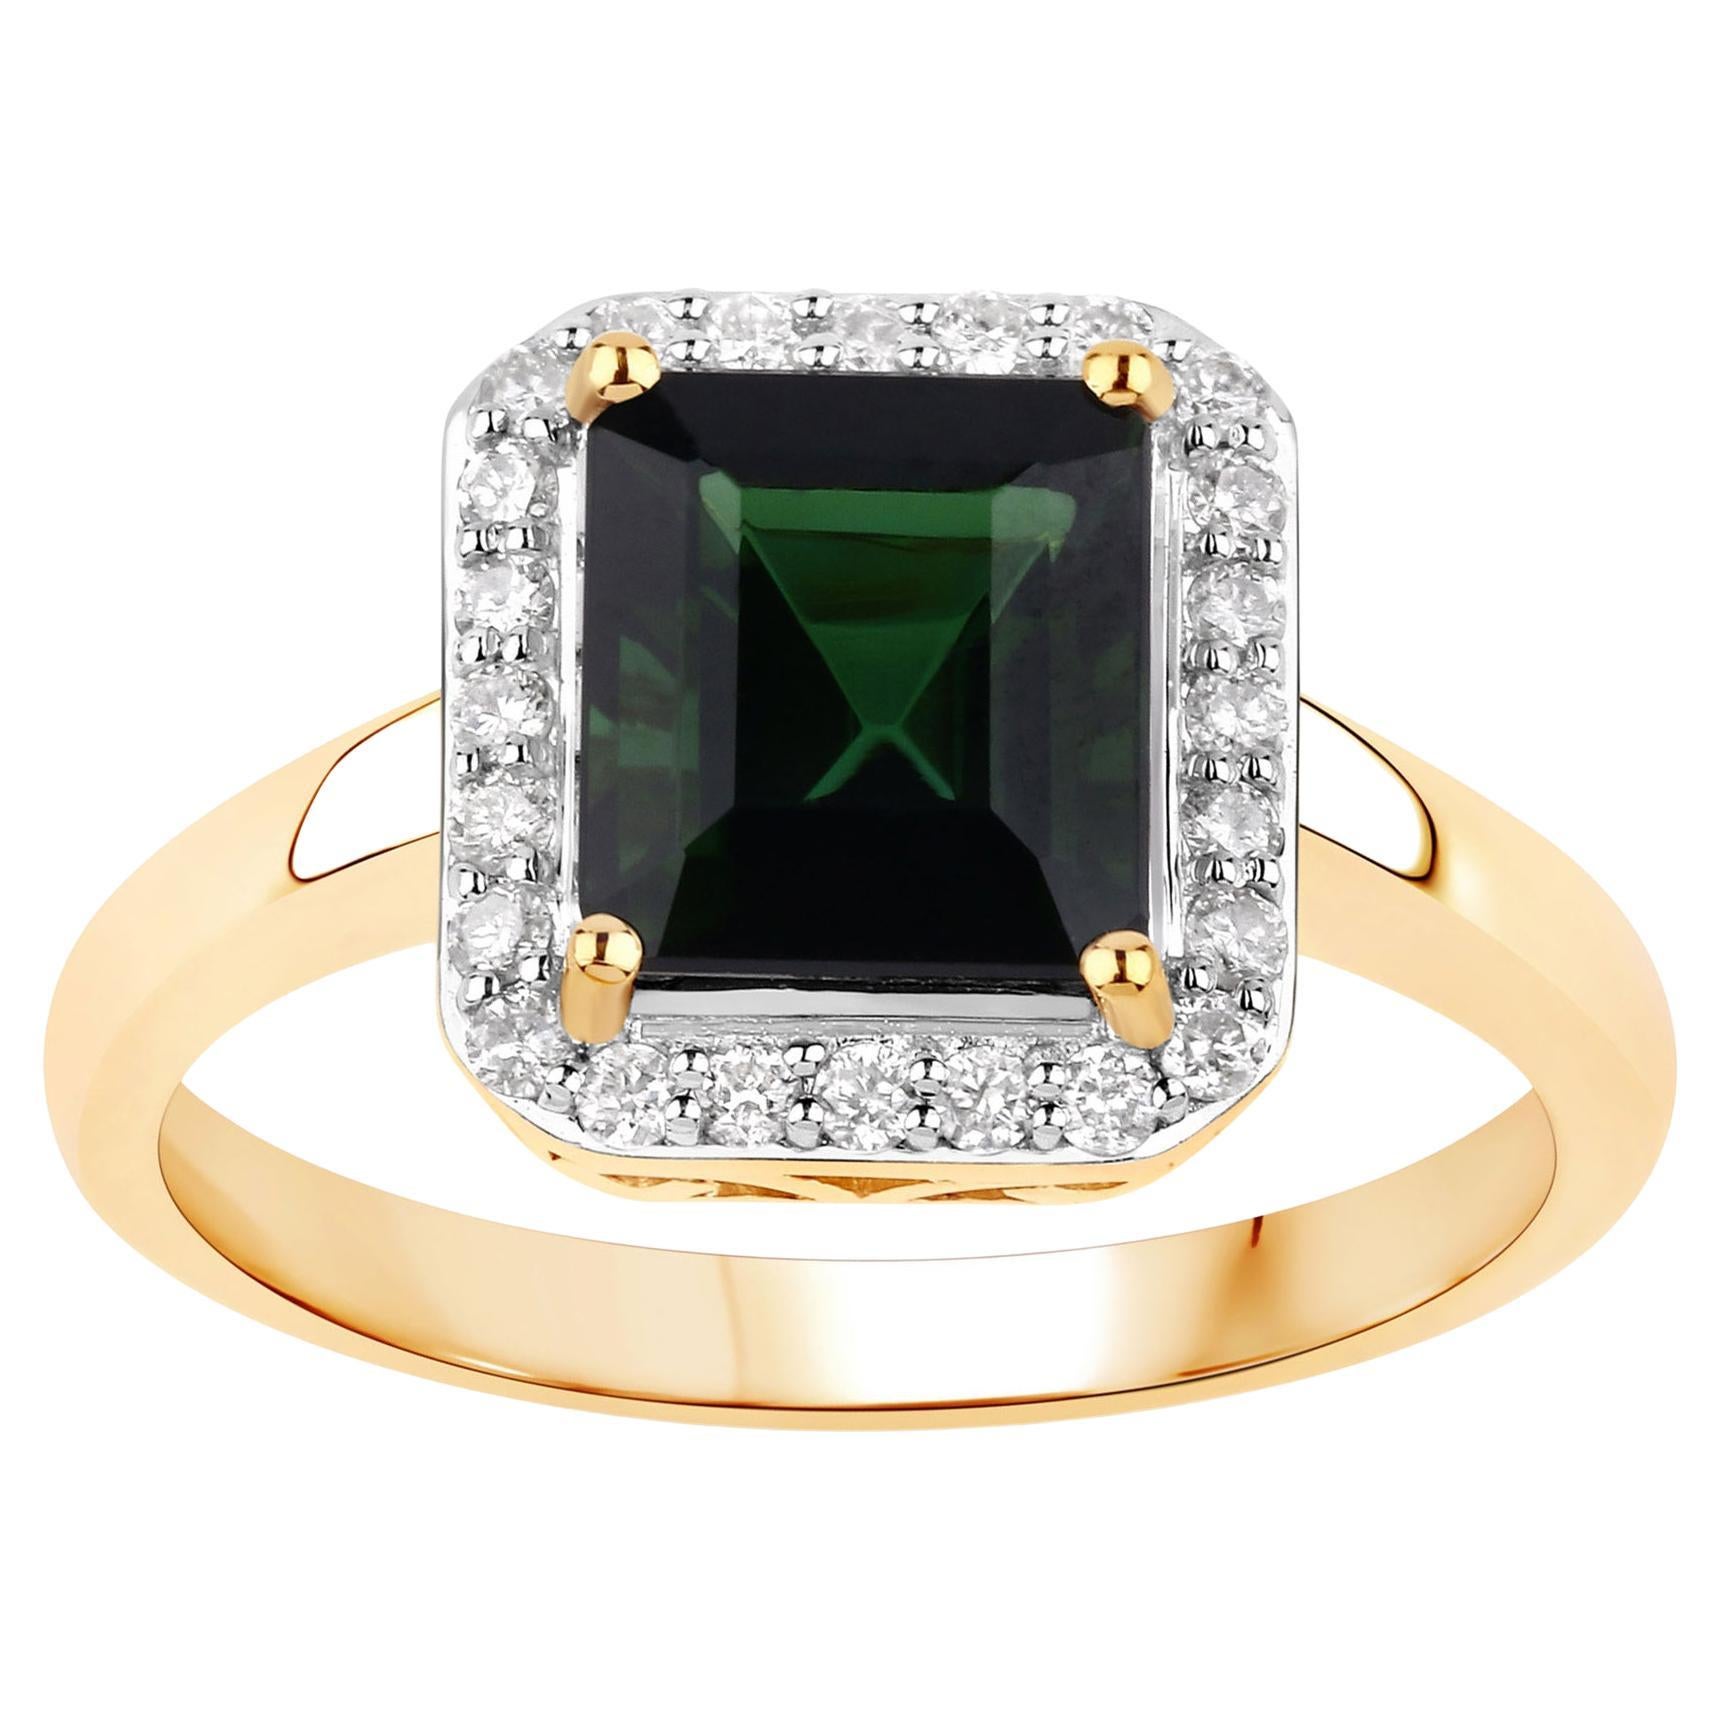 Green Tourmaline Ring With Diamonds 3.02 Carats 14K Yellow Gold